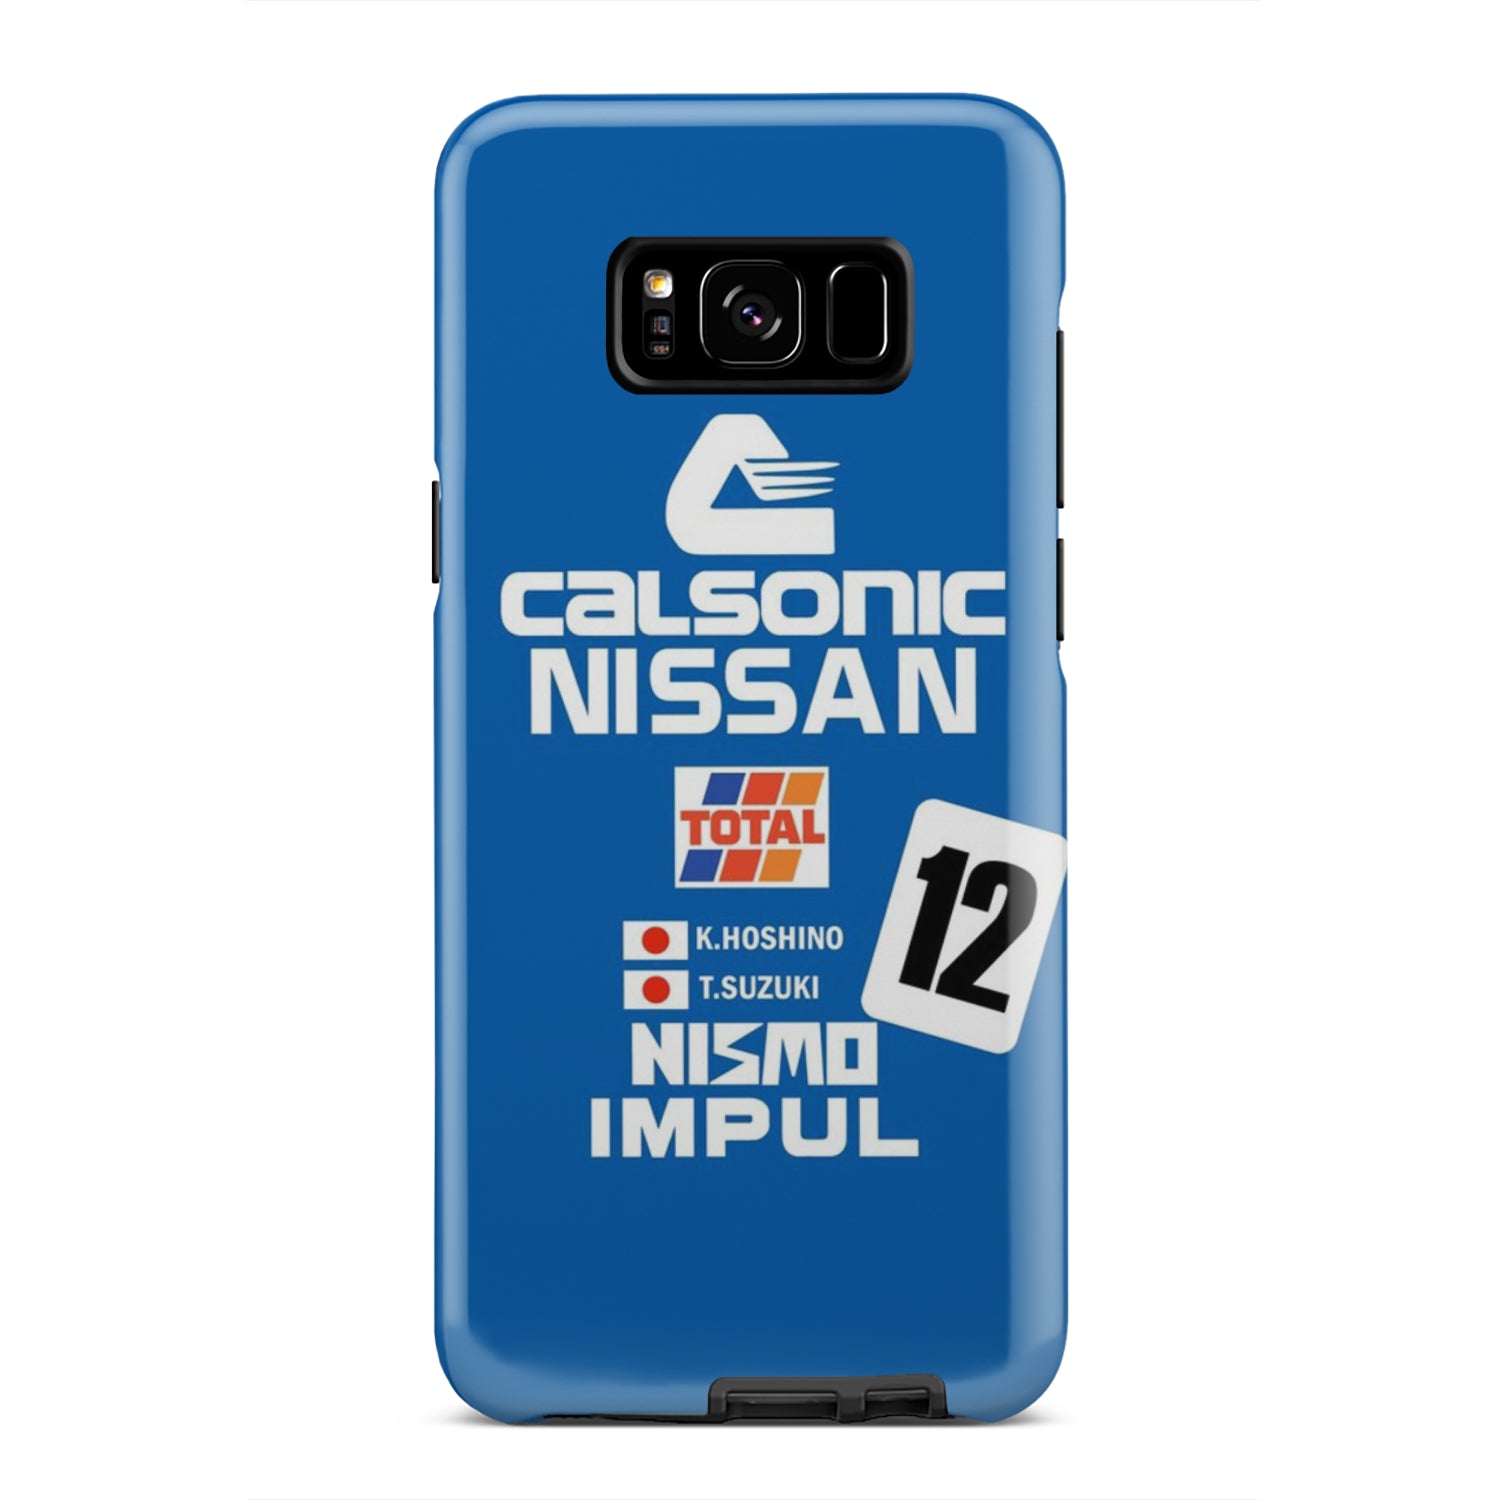 Nissan Calsonic Phone Case